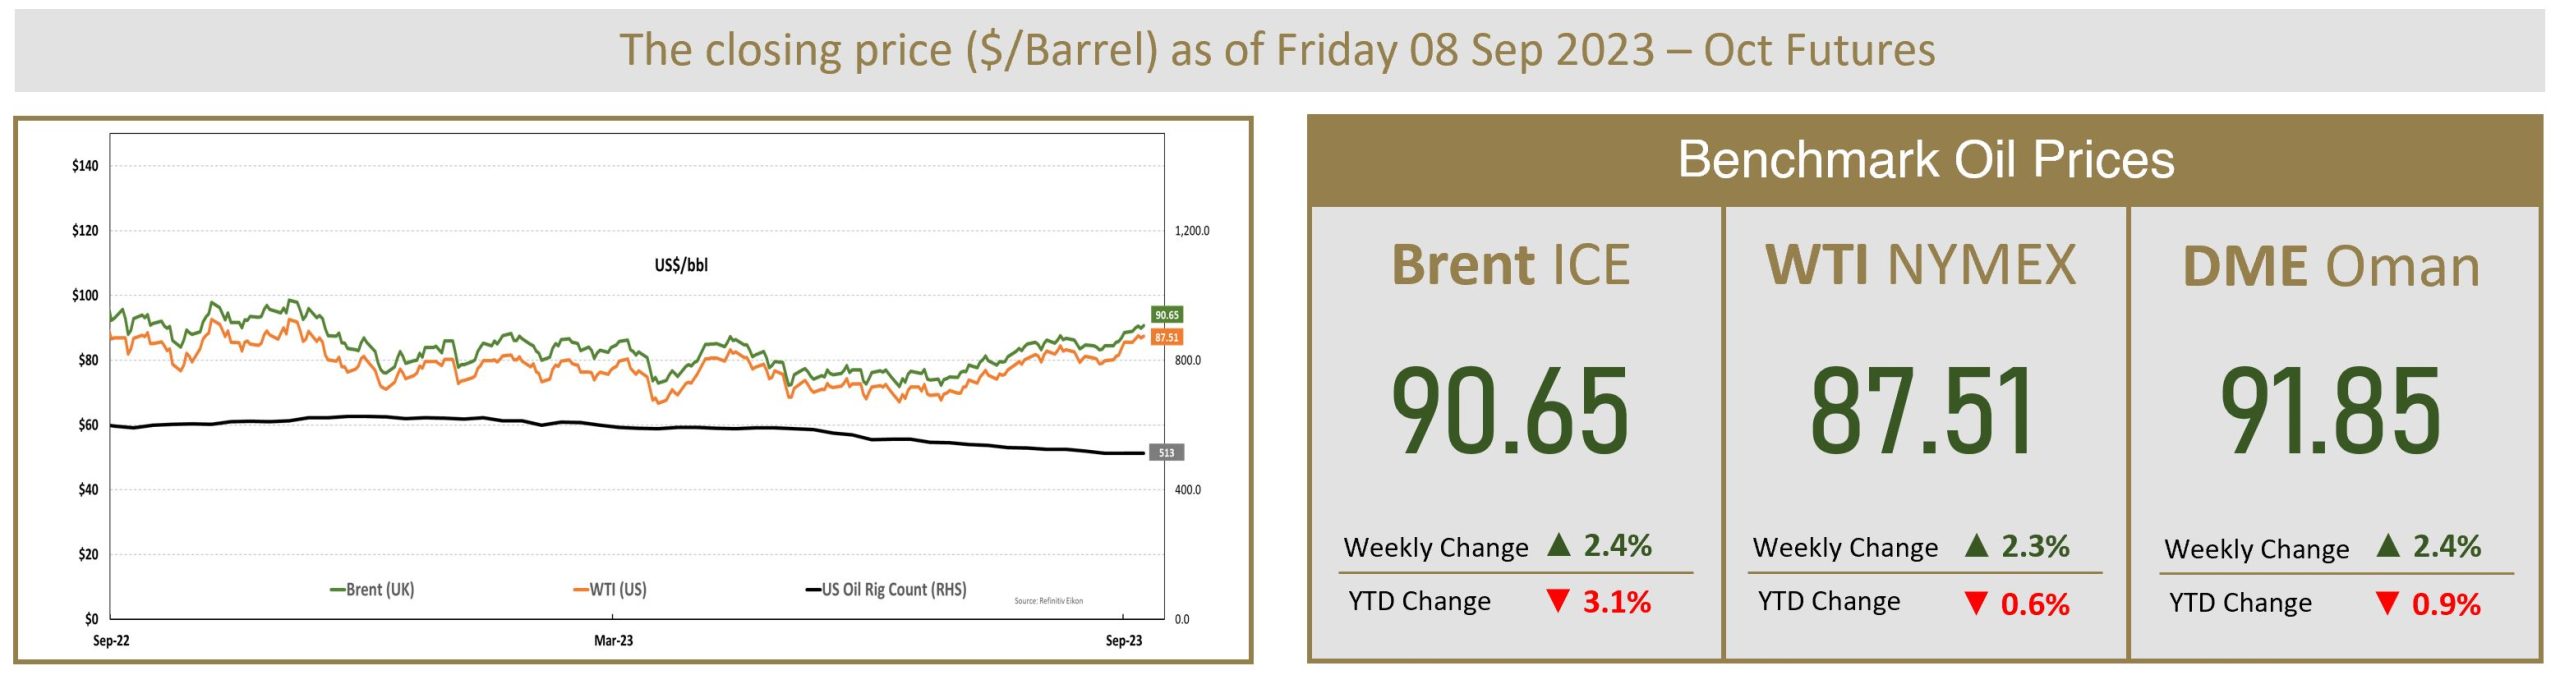 Benchmark Oil Prices 9 Sep 2023